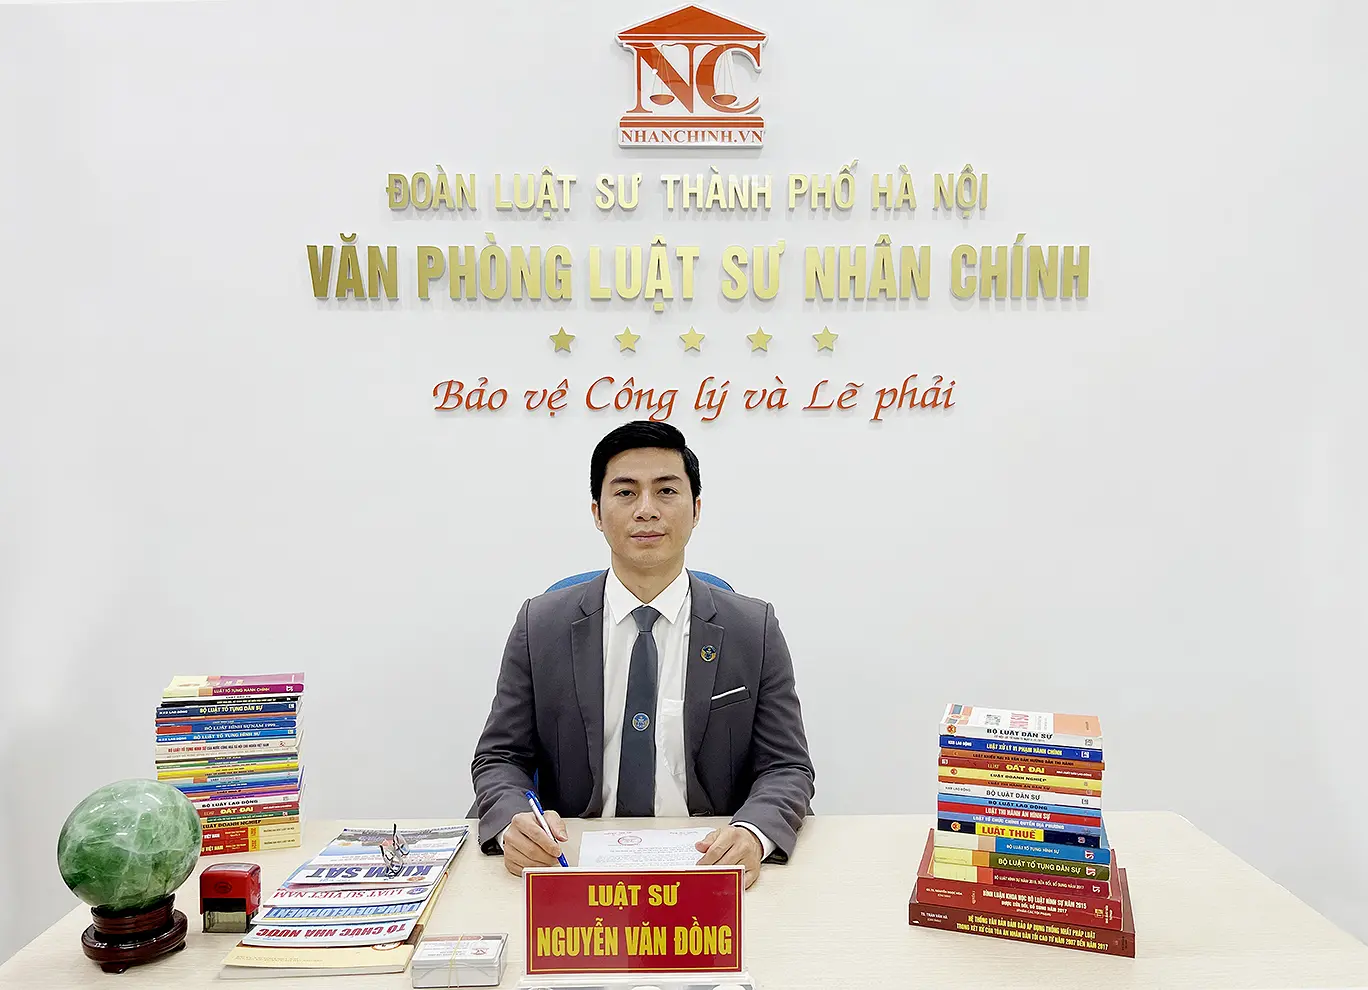 Van Phong Luat Su Nhan Chinh Van Phong Luat Su Tai Ha Noi